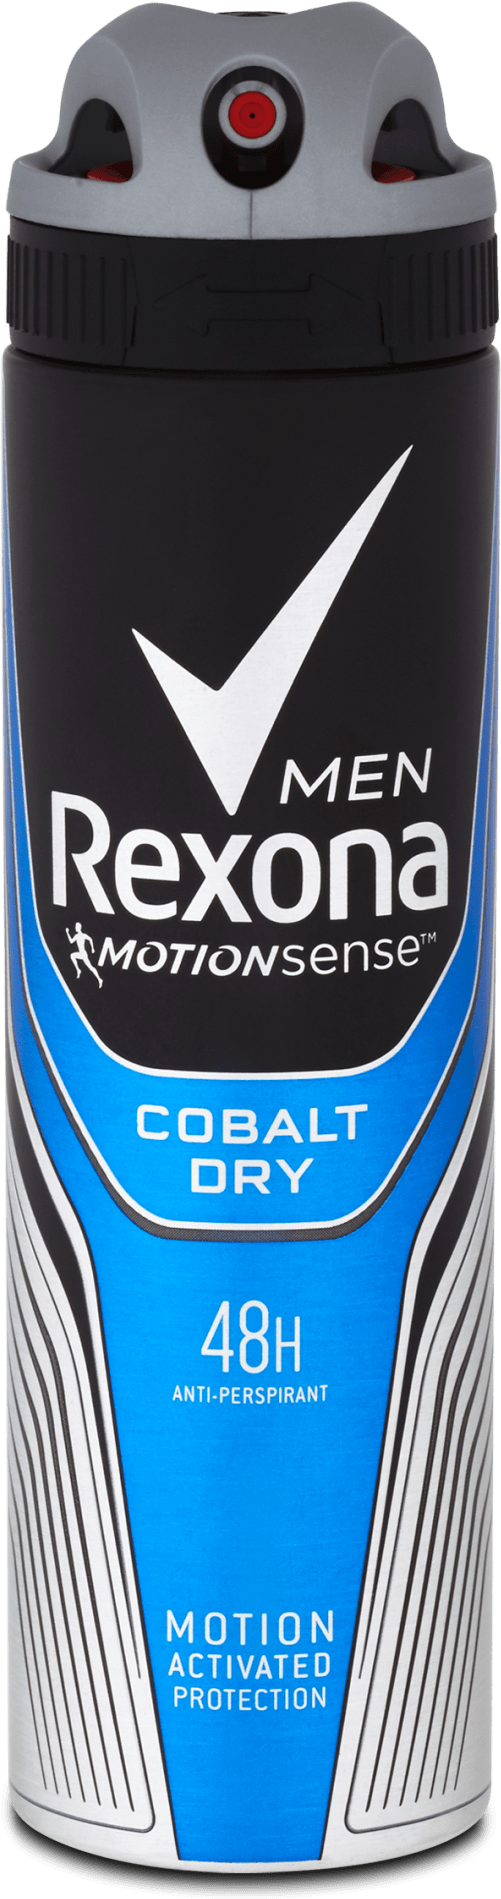 Rexona men
antiperspirant sprej Cobalt Dry, 150 ml